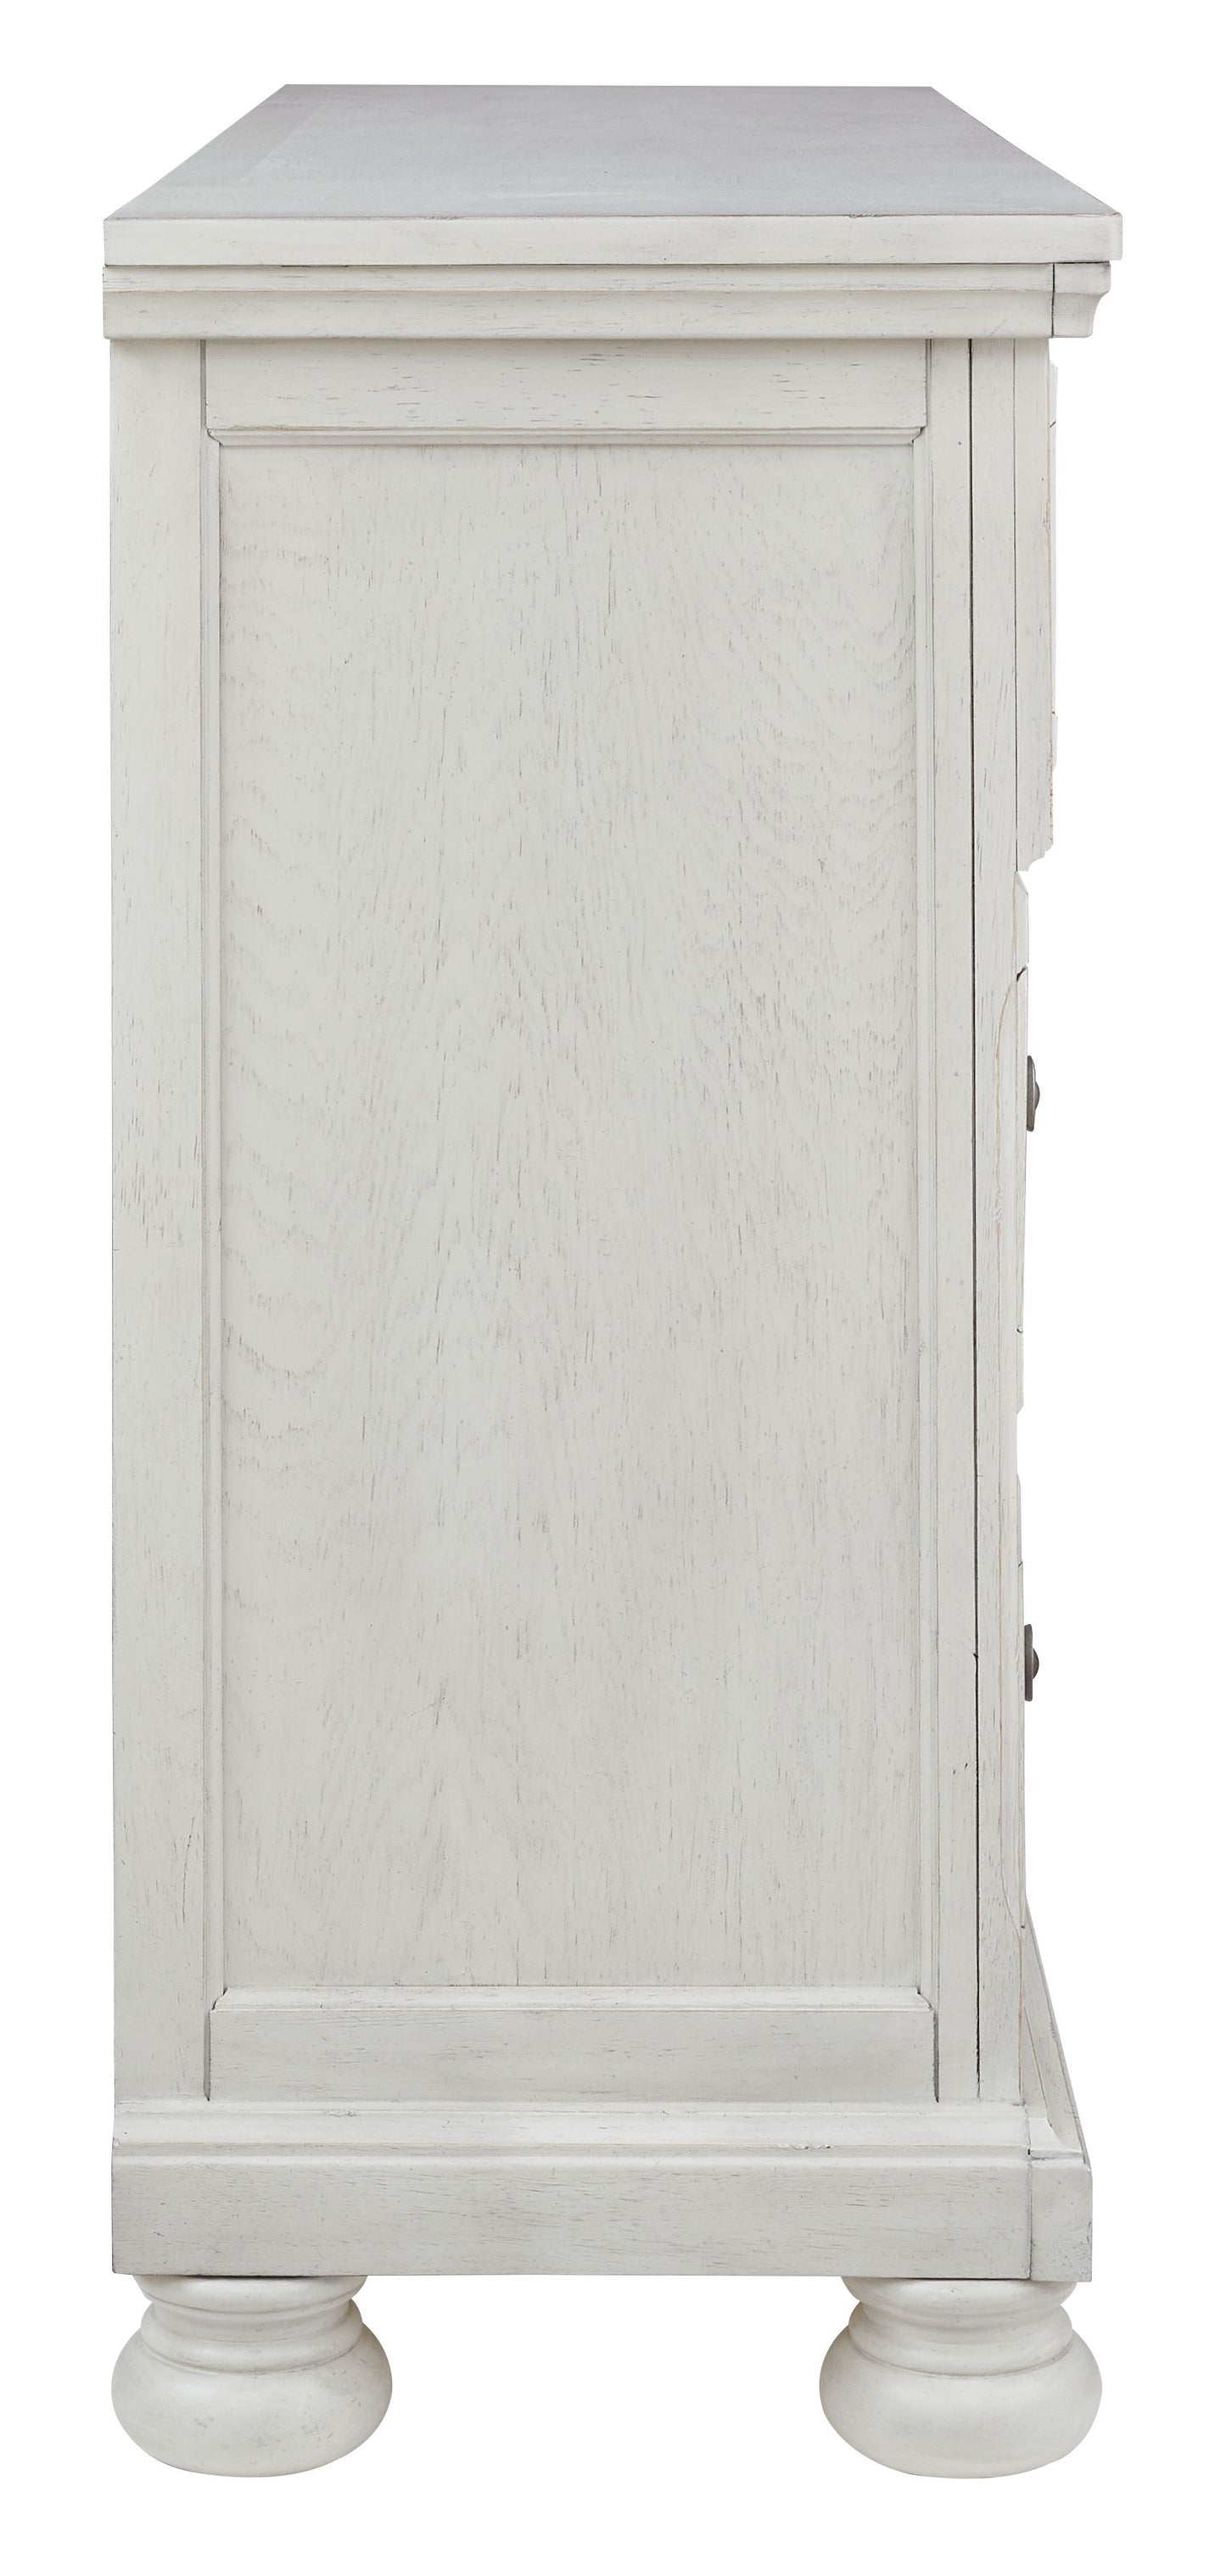 Robbinsdale - Antique White - Dresser - 7 Drawers